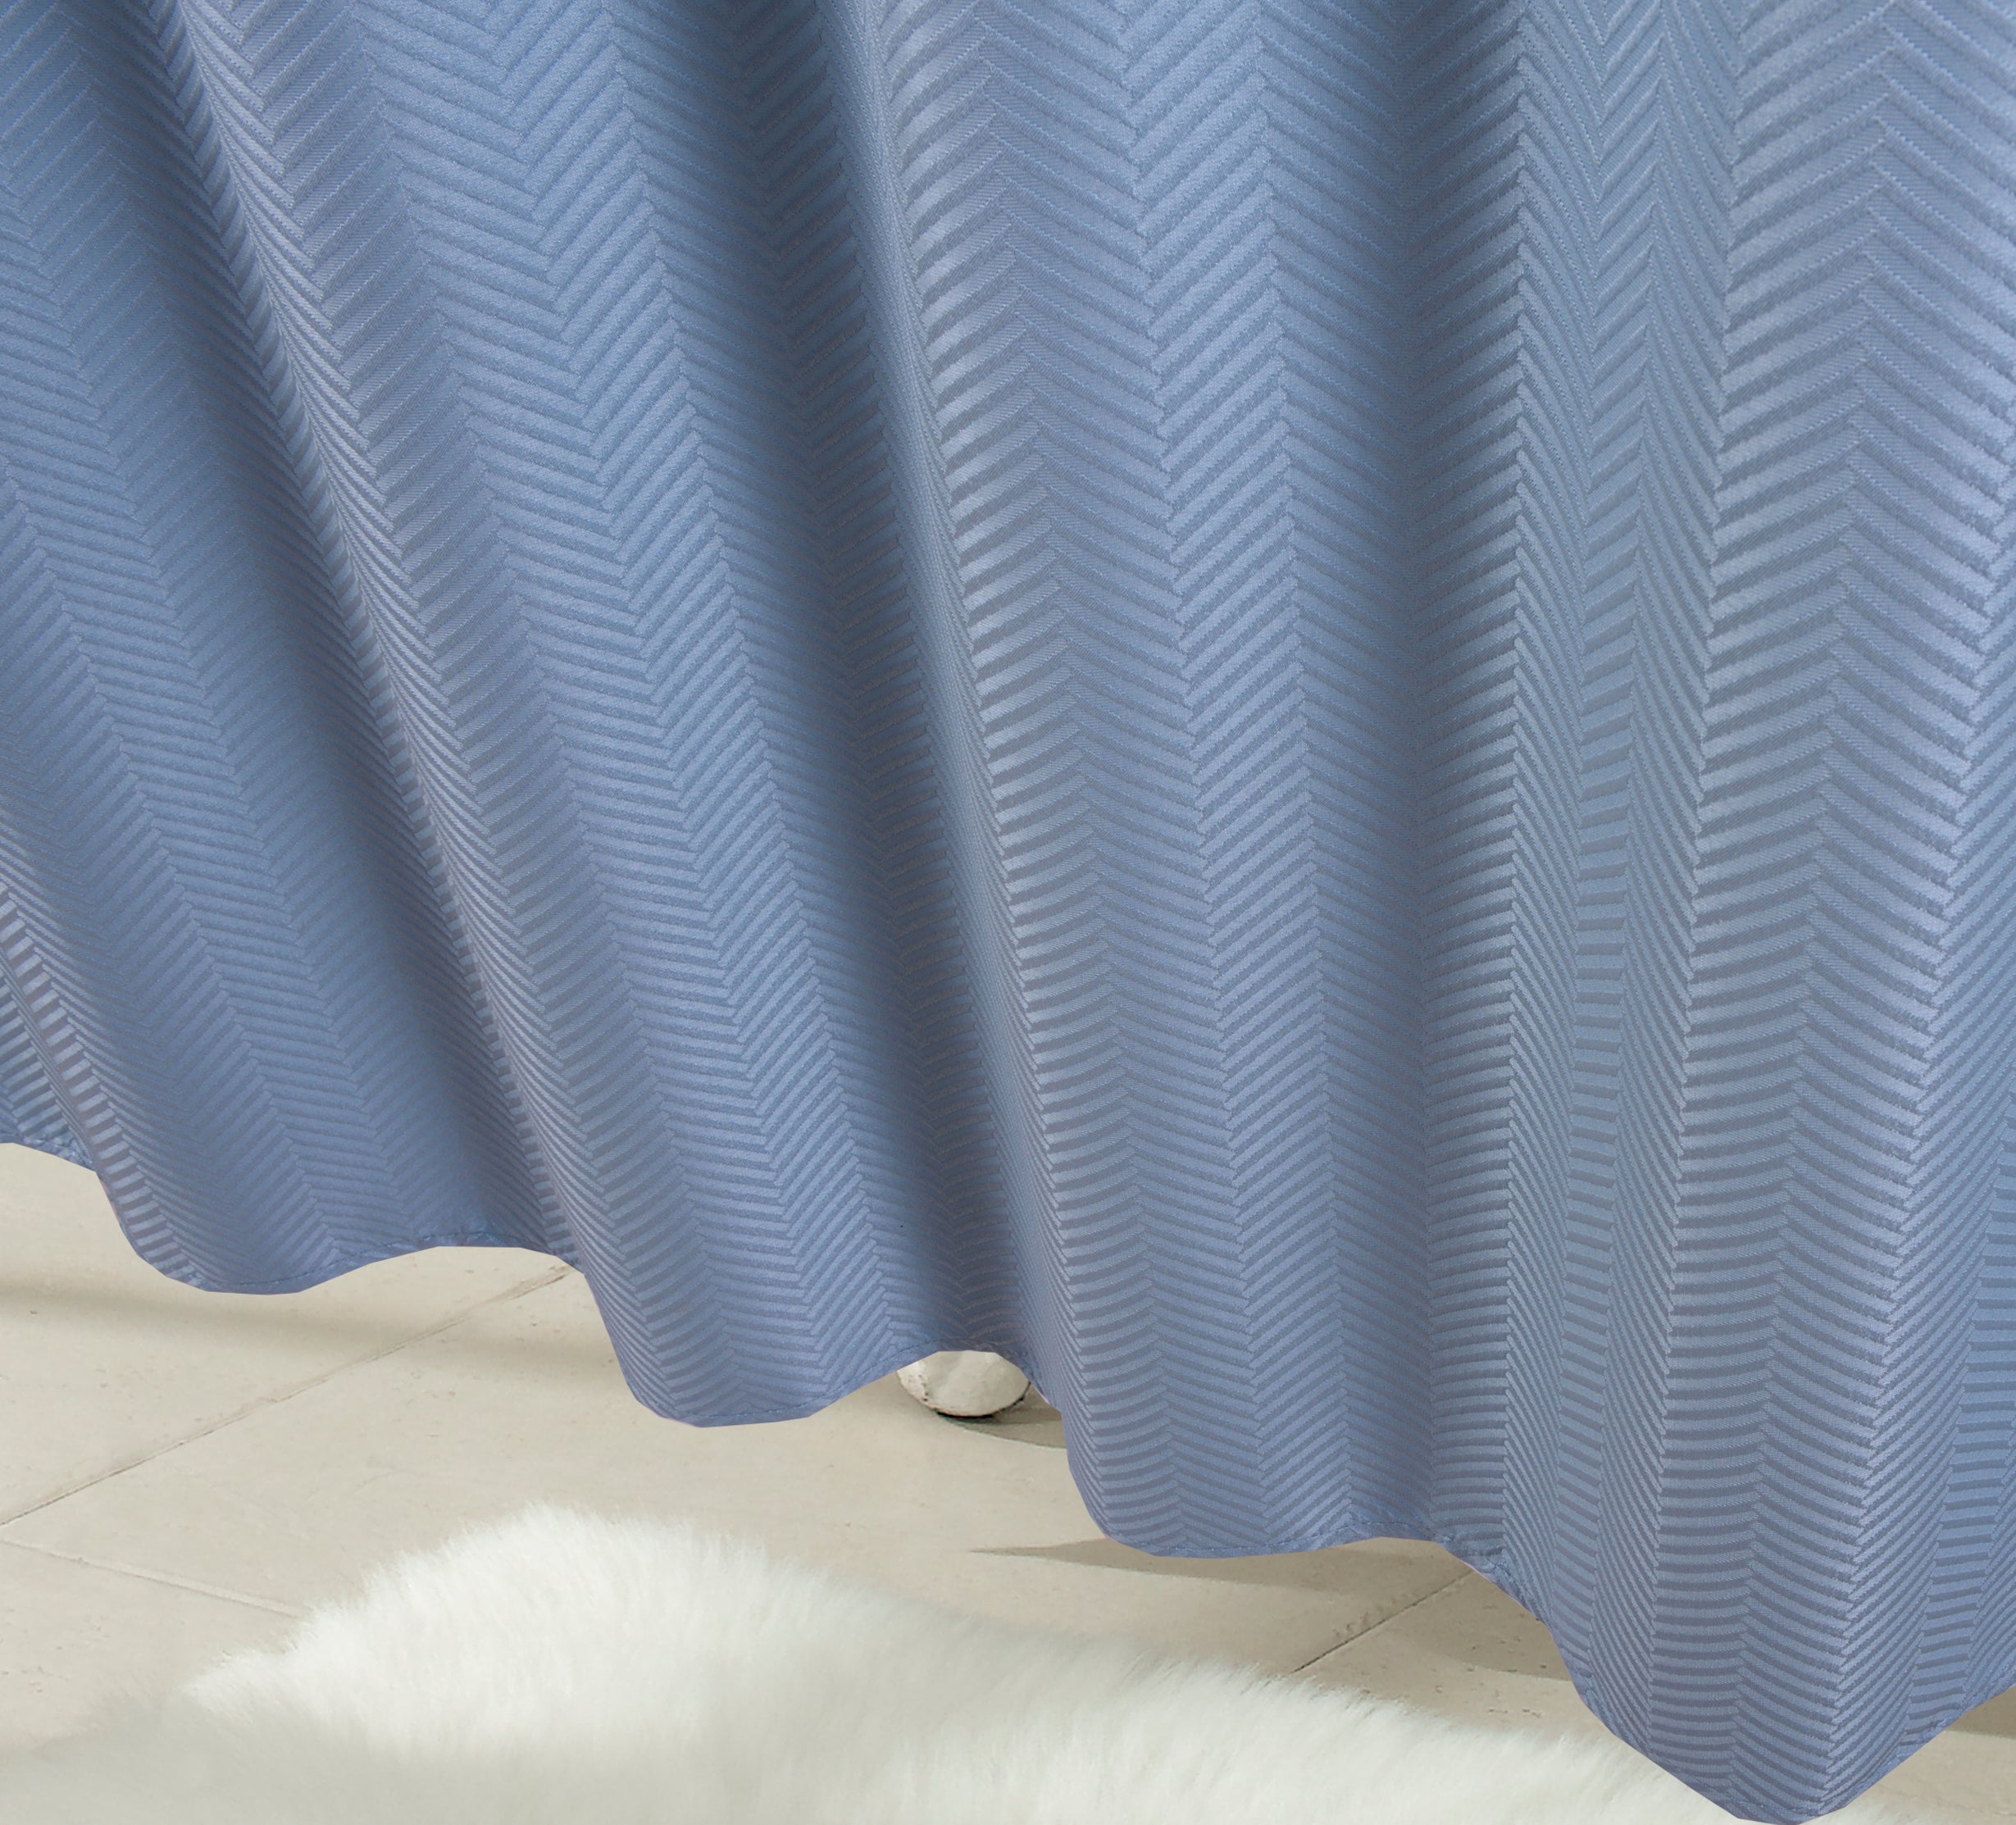 Dainty Home Latona Heavy Matelasse Fabric Shower Curtain with Cotton Feel and Chevron Pattern